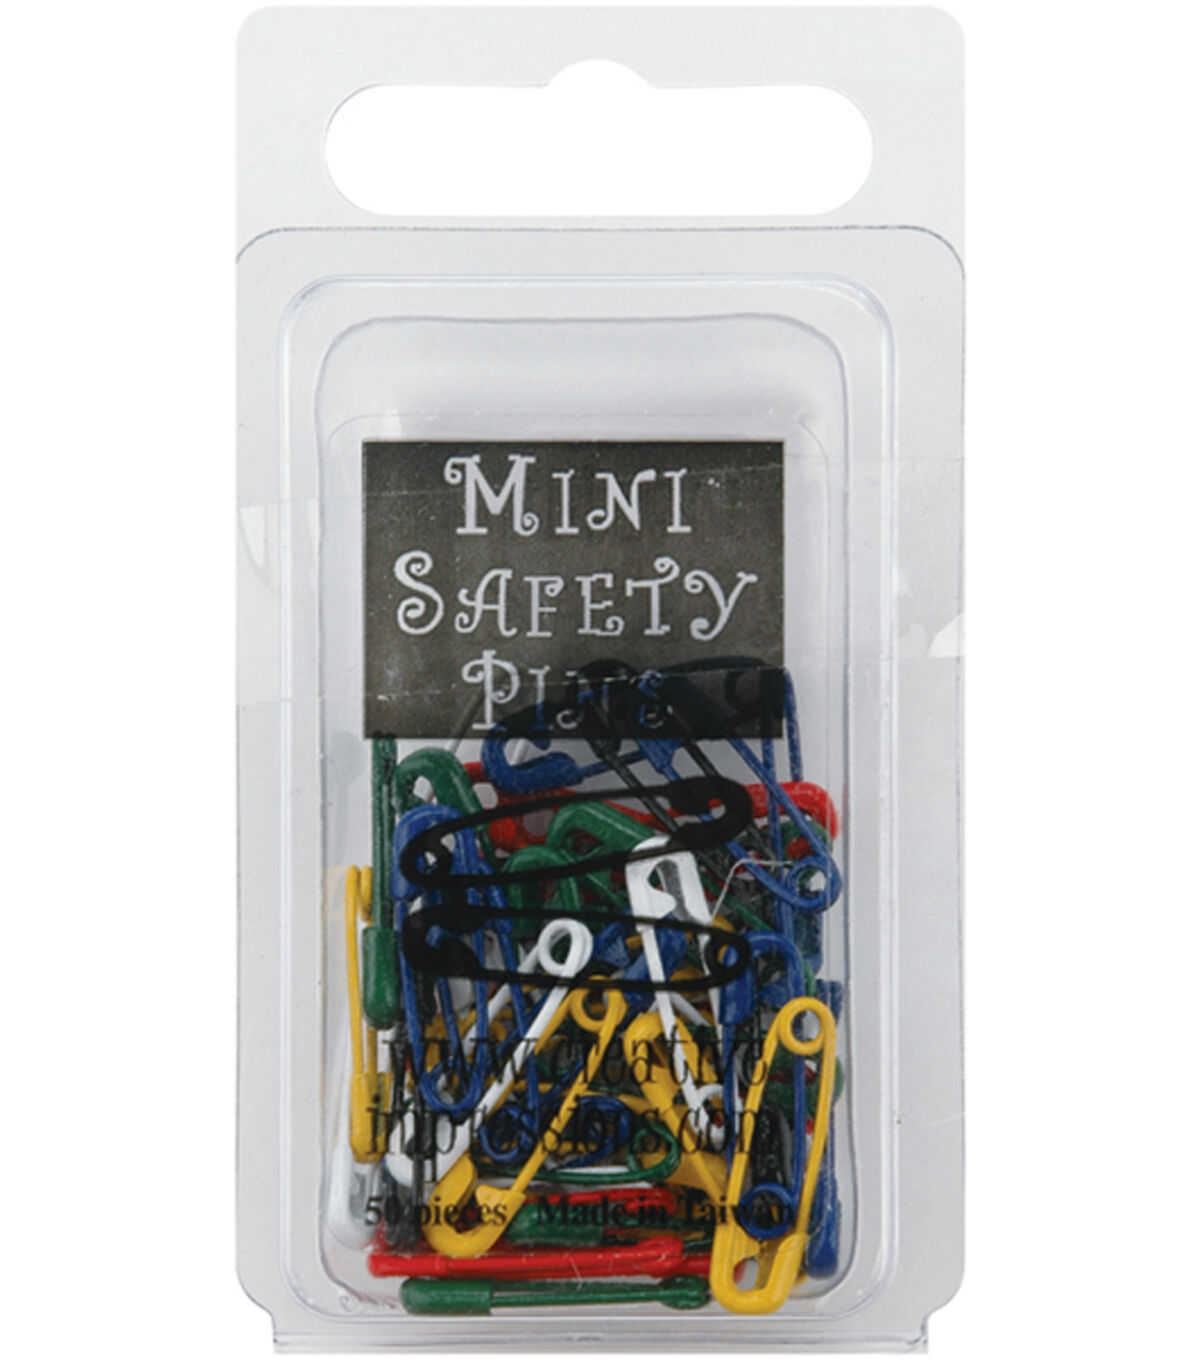 mini safety pins